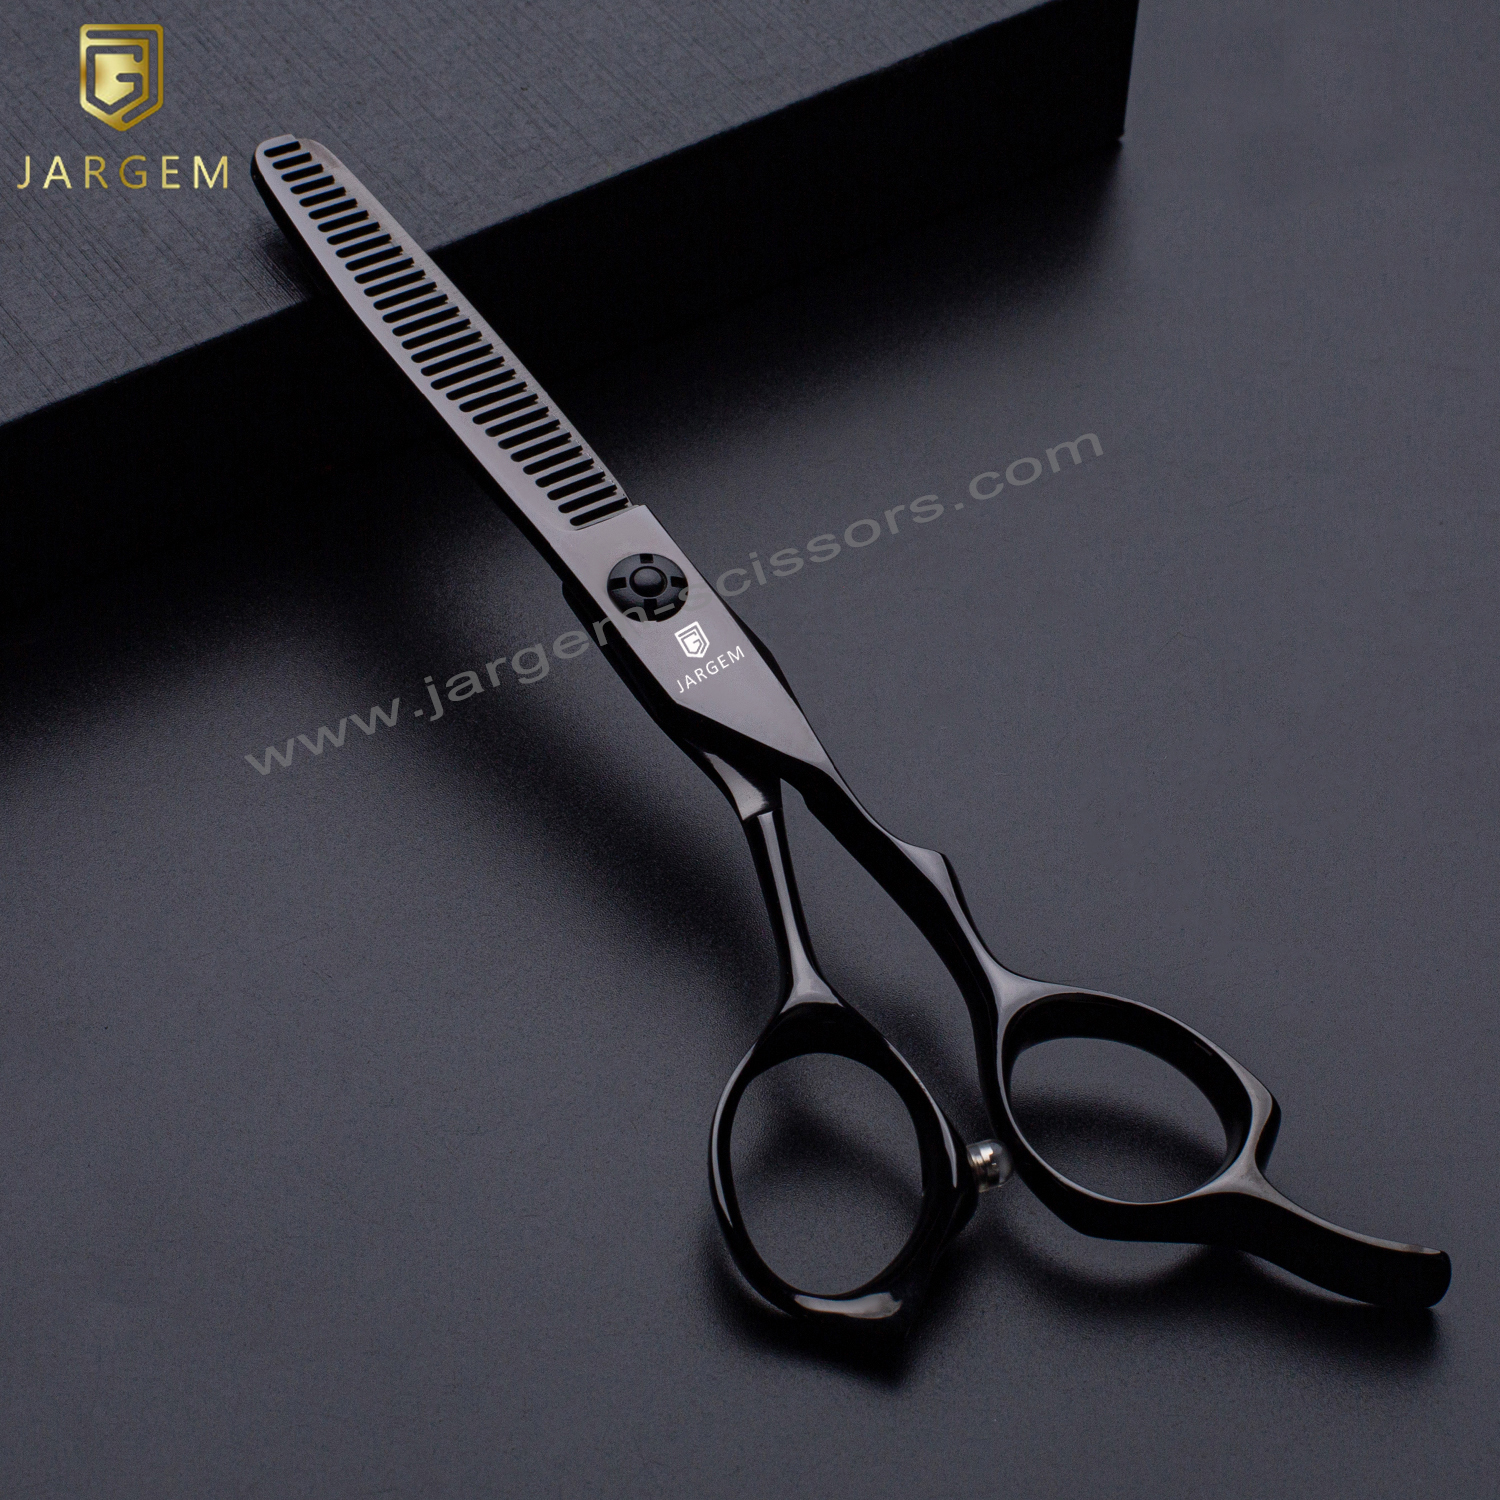 JARGEM Black Hair Scissors Set Professional Cutting Scissors for Barber Japanese Hair Shears